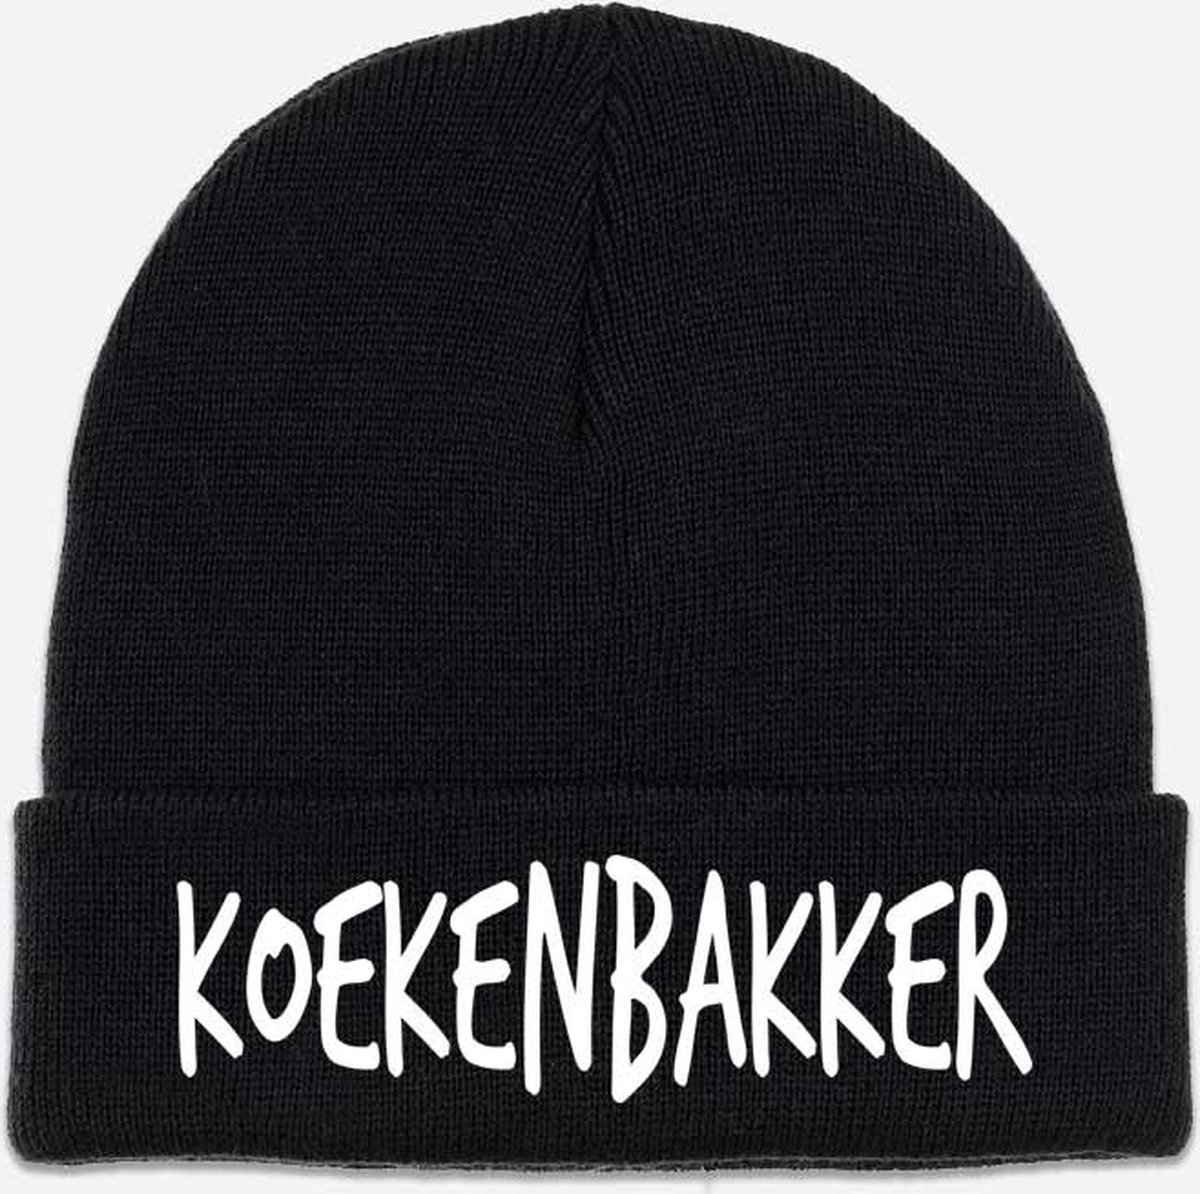 Muts Koekenbakker - Beanie - Winter - Heren - Dames - One-size - Acryl - zwart